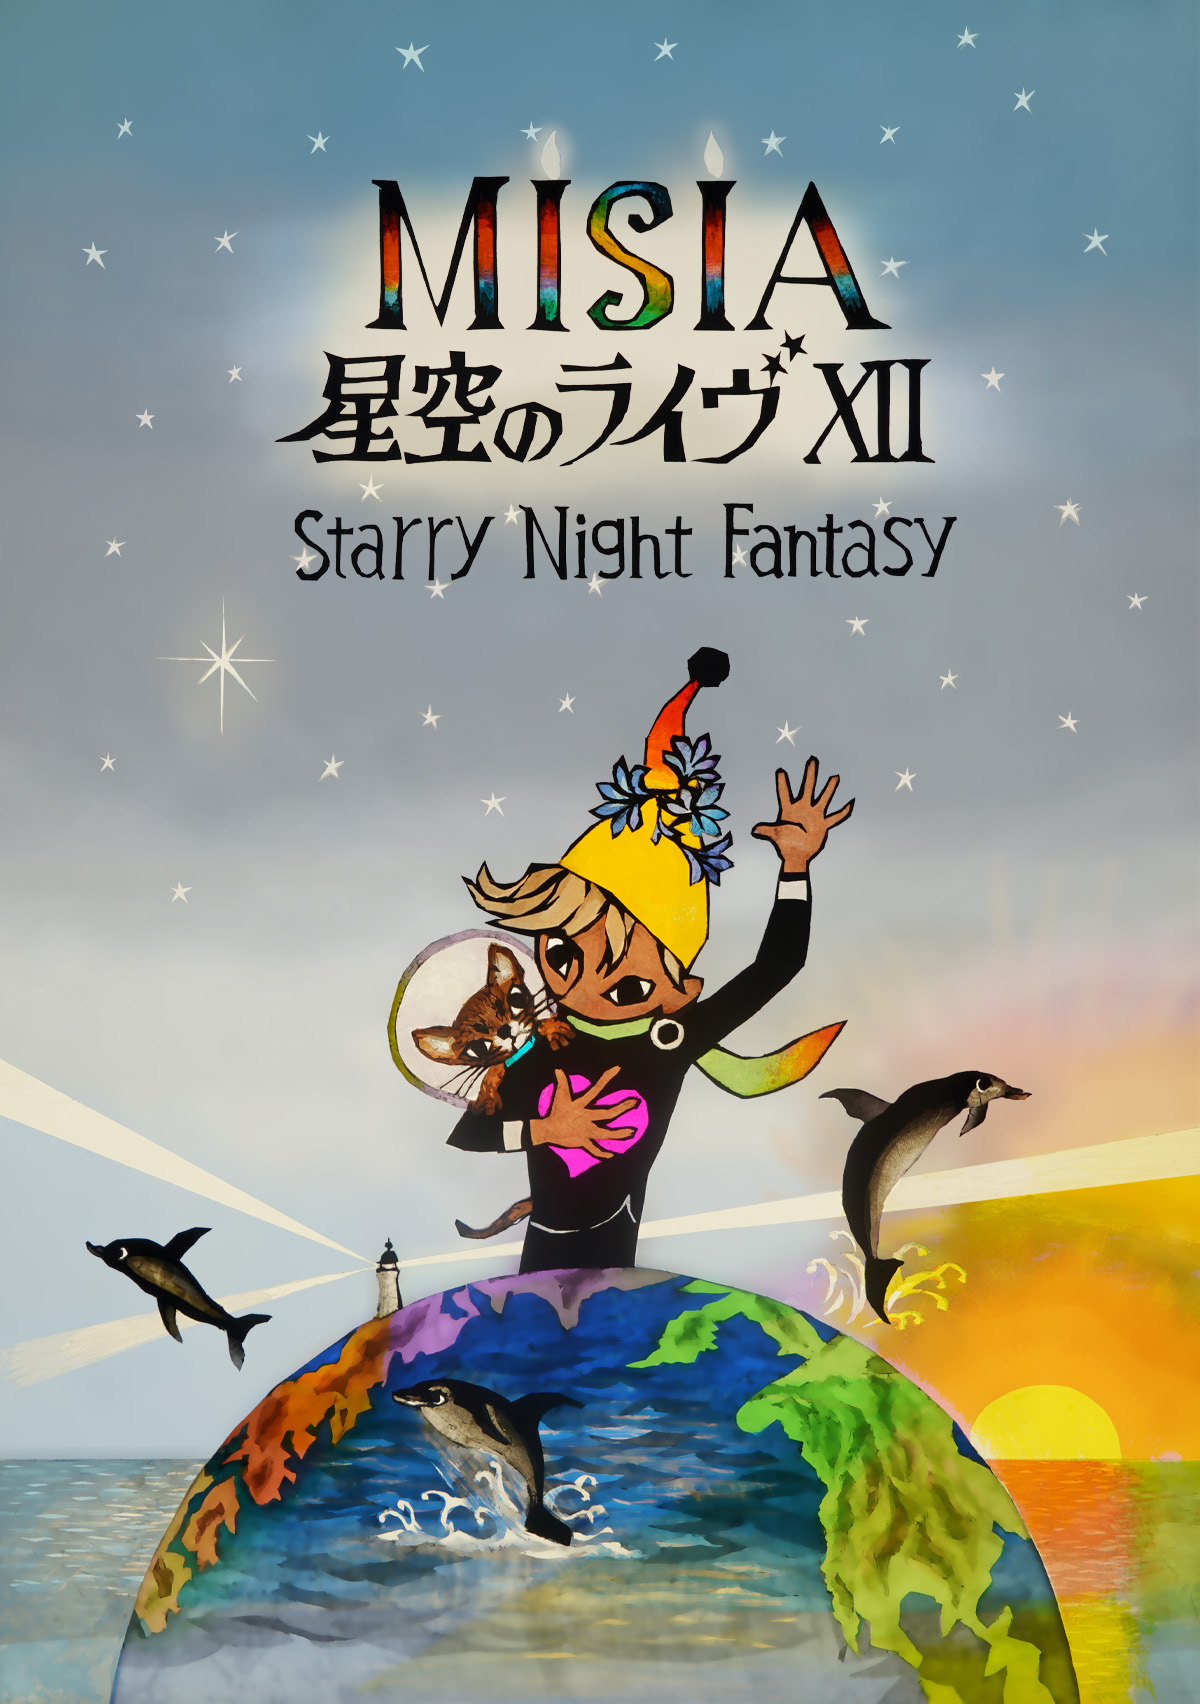 MISIA OFFICIAL SUPPORTERS CLUB MSA会員限定 25th Anniversary MISIA 星空のライヴⅫ Starry Night Fantasy 香港公演 JTBツアー